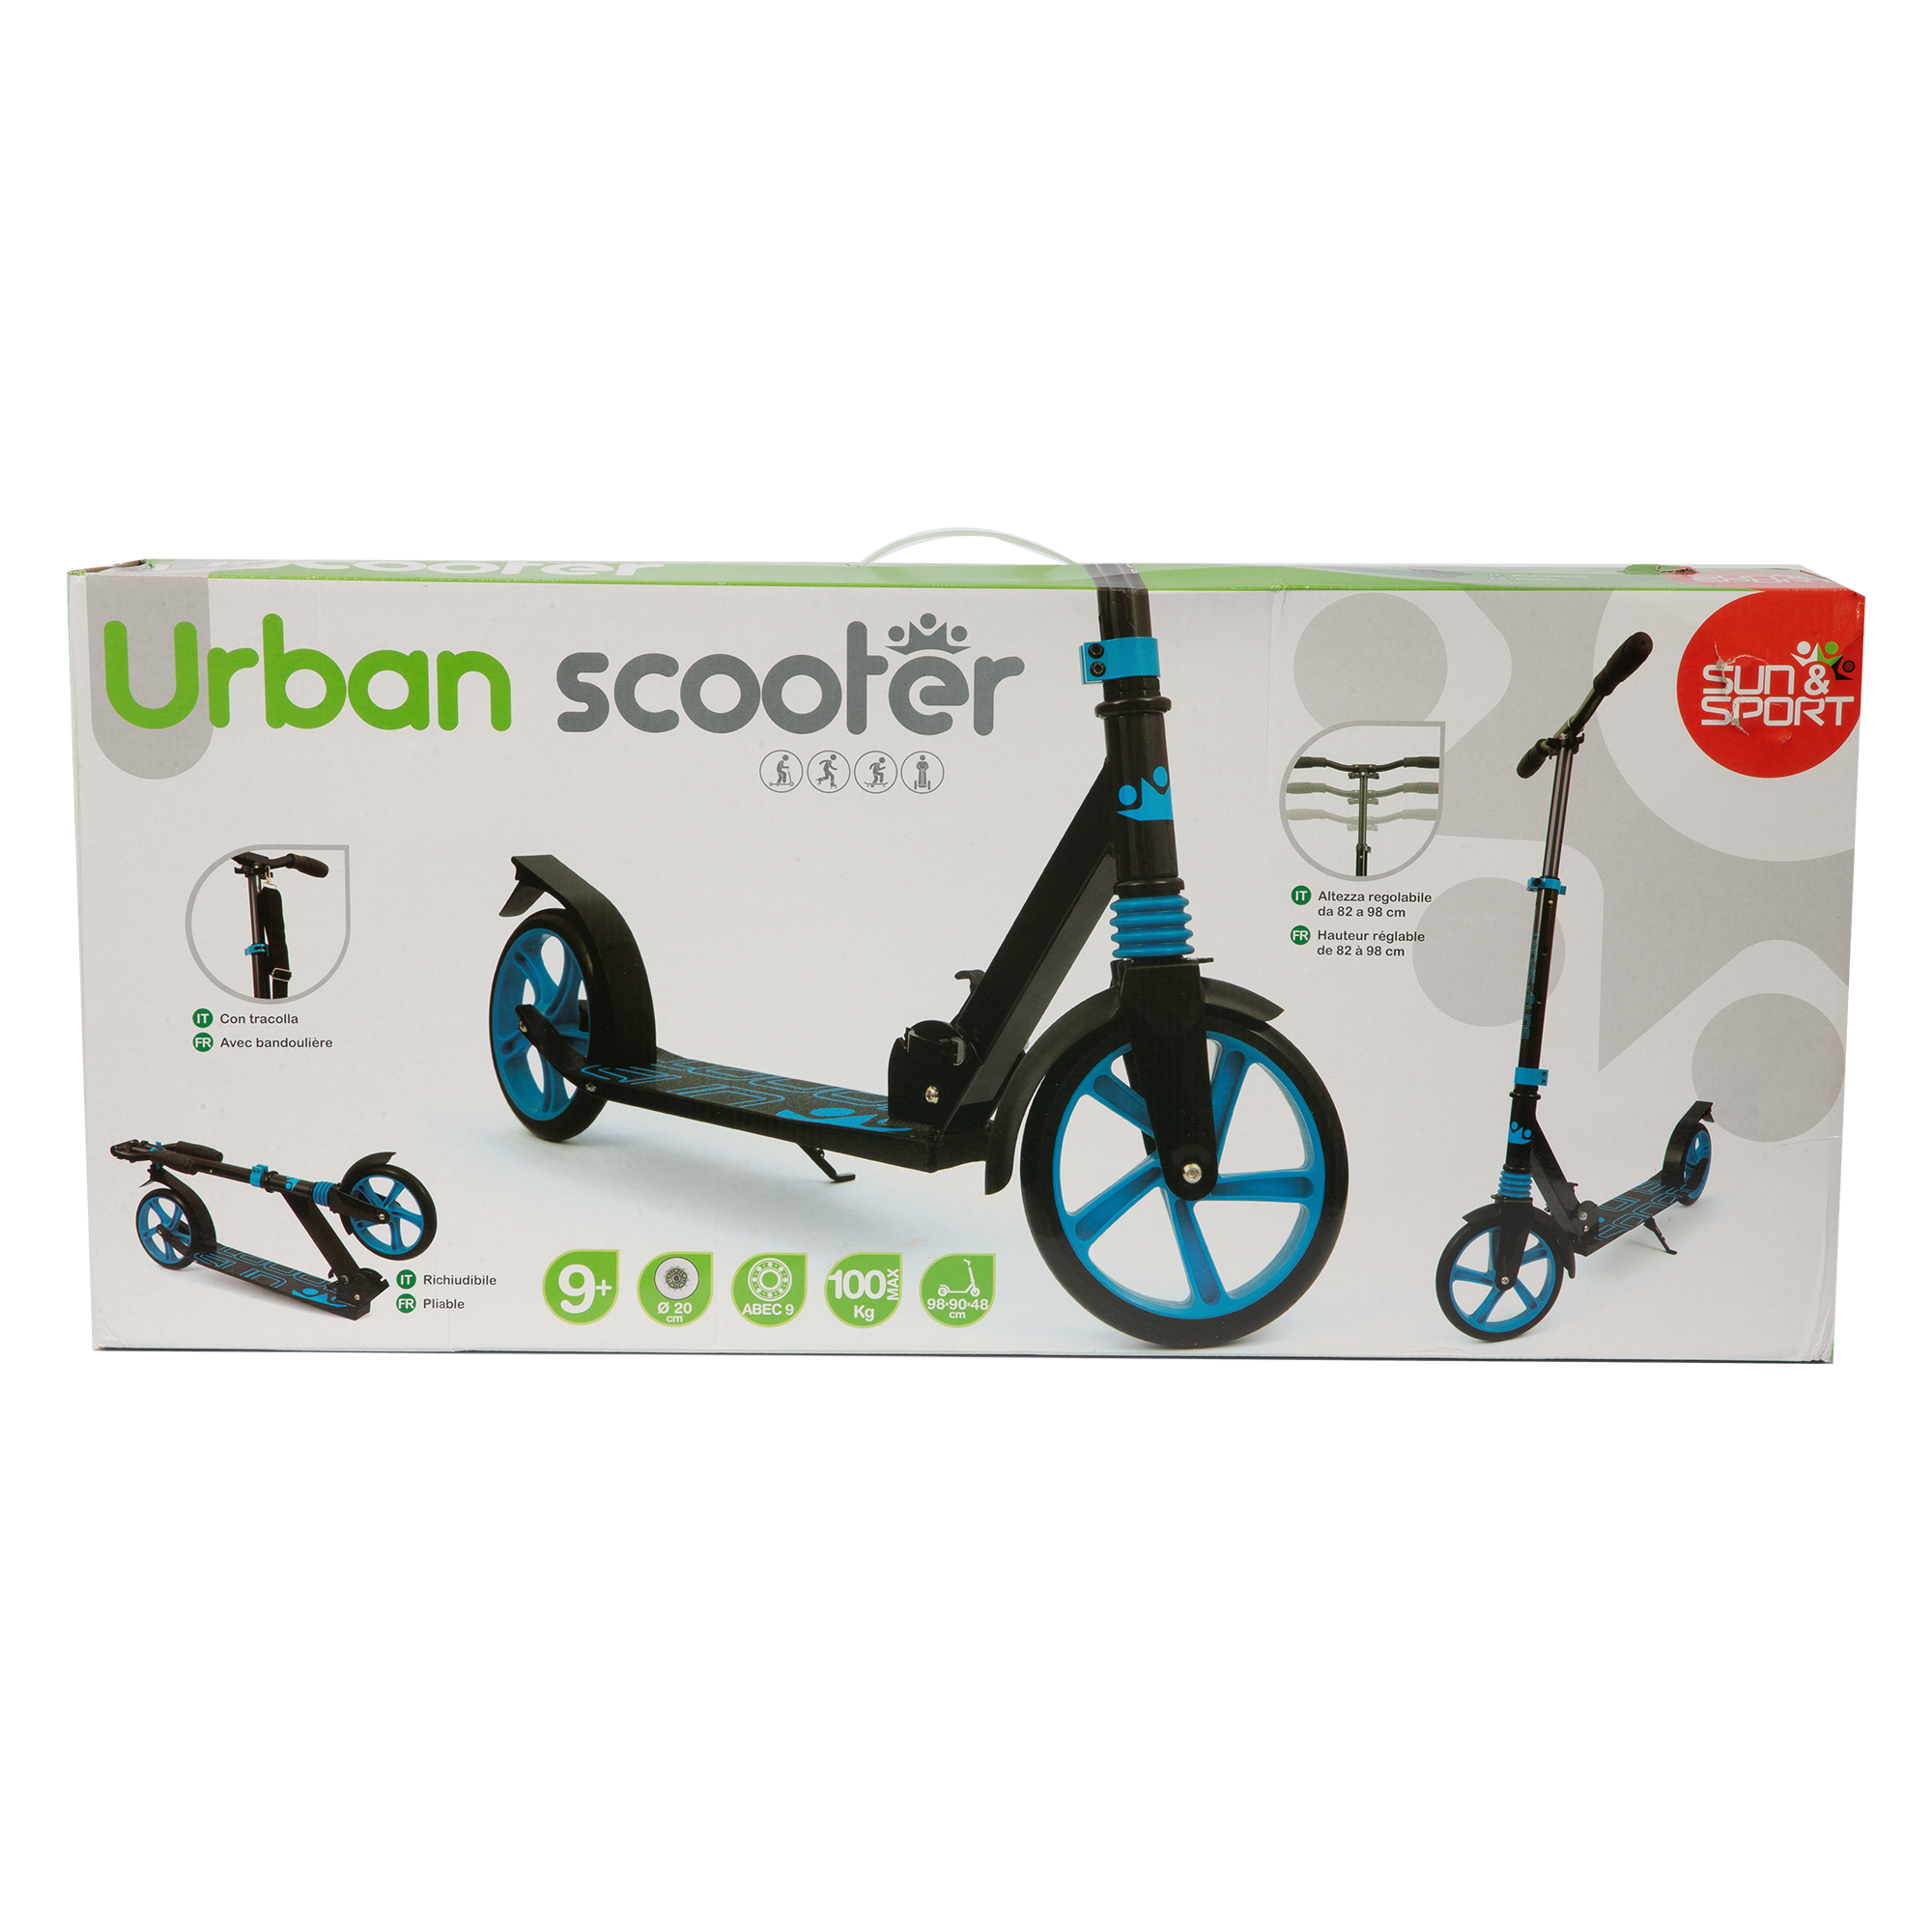 Urban scooter - monopattino 200mm - SUN&SPORT